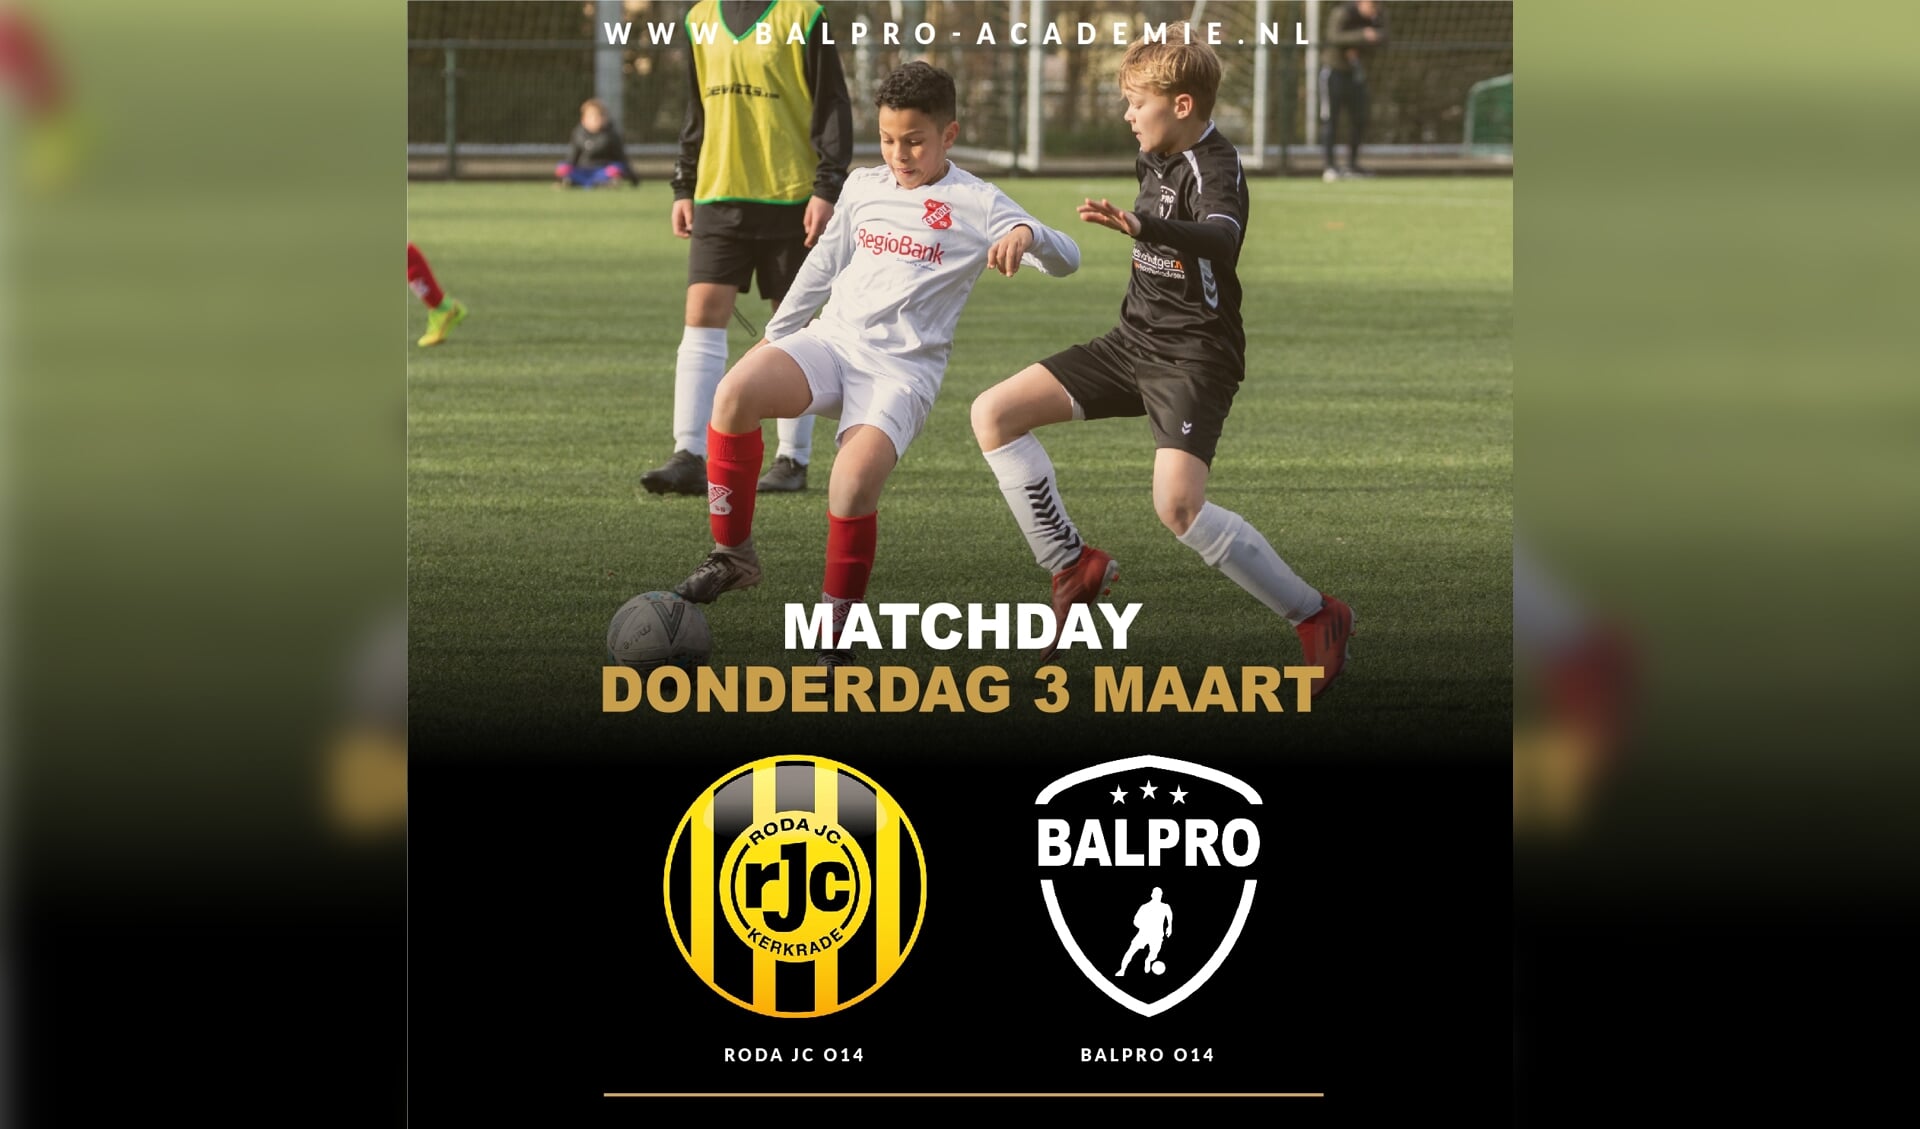 Wedstrijd aankondiging Roda JC - BALPRO O14.